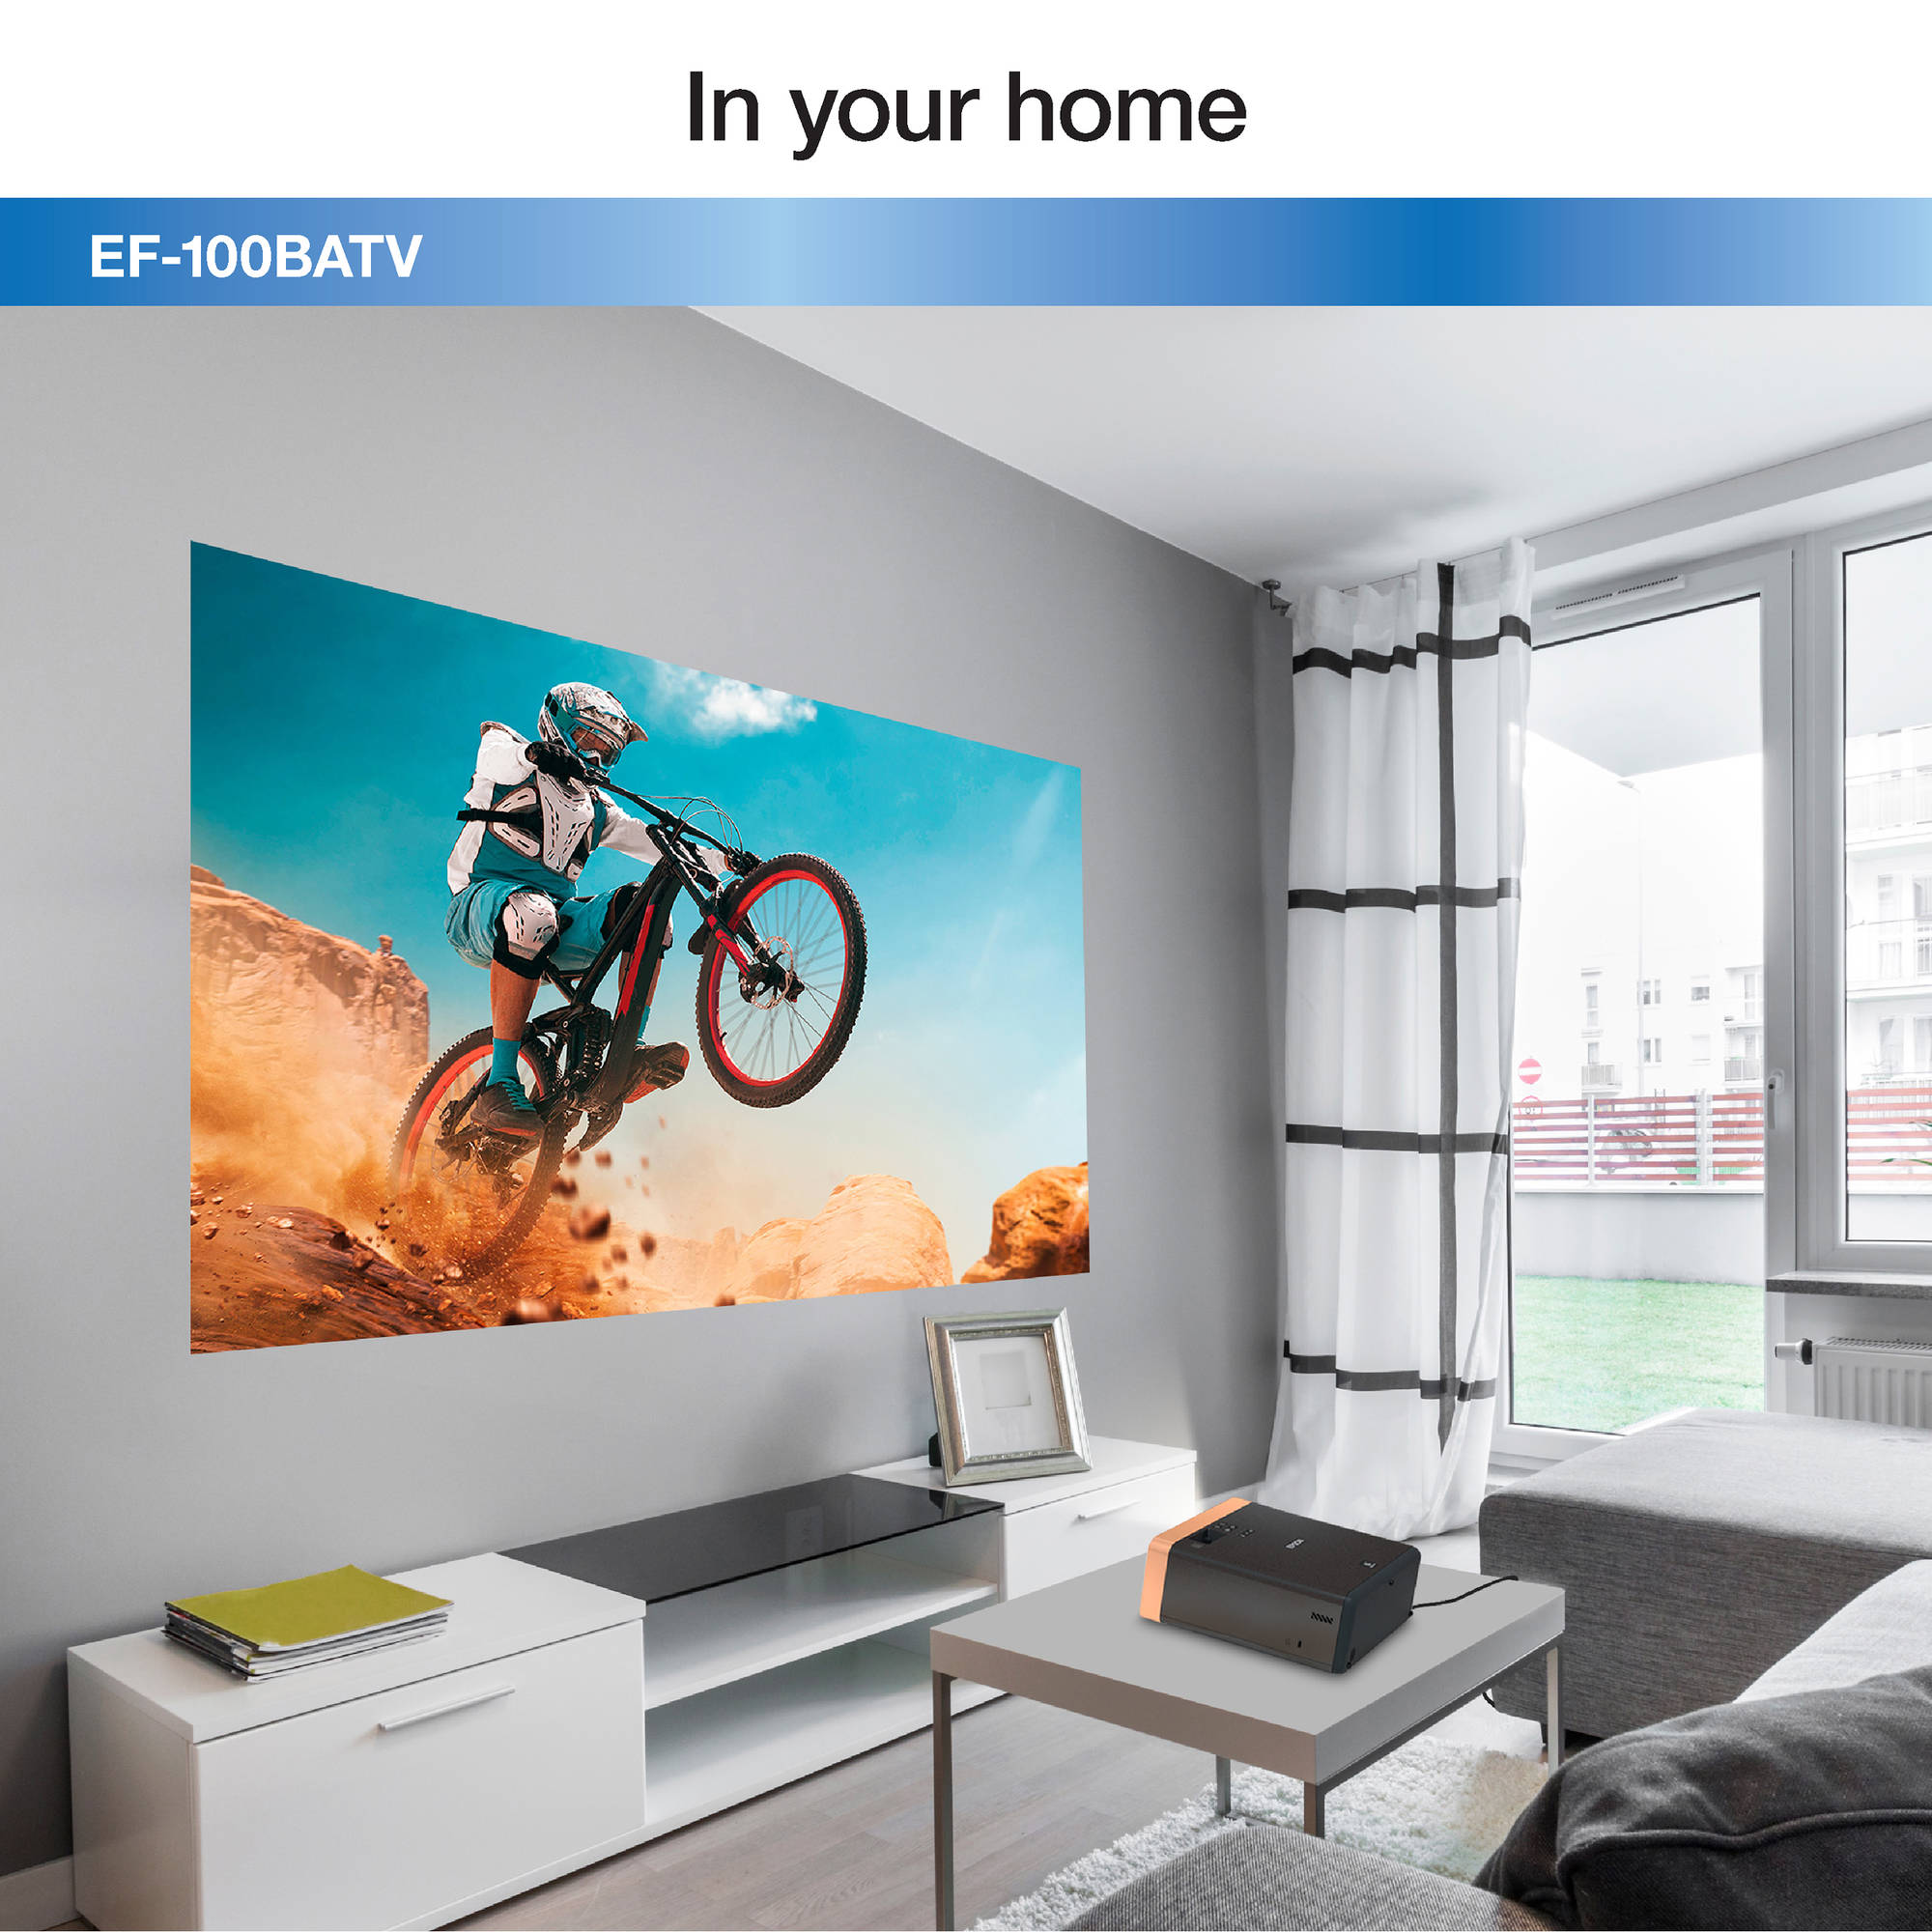 Epson EF-100 Home Theatre Laaser 3LCD Proyector con adaptador inalámbrico Android TV (negro)